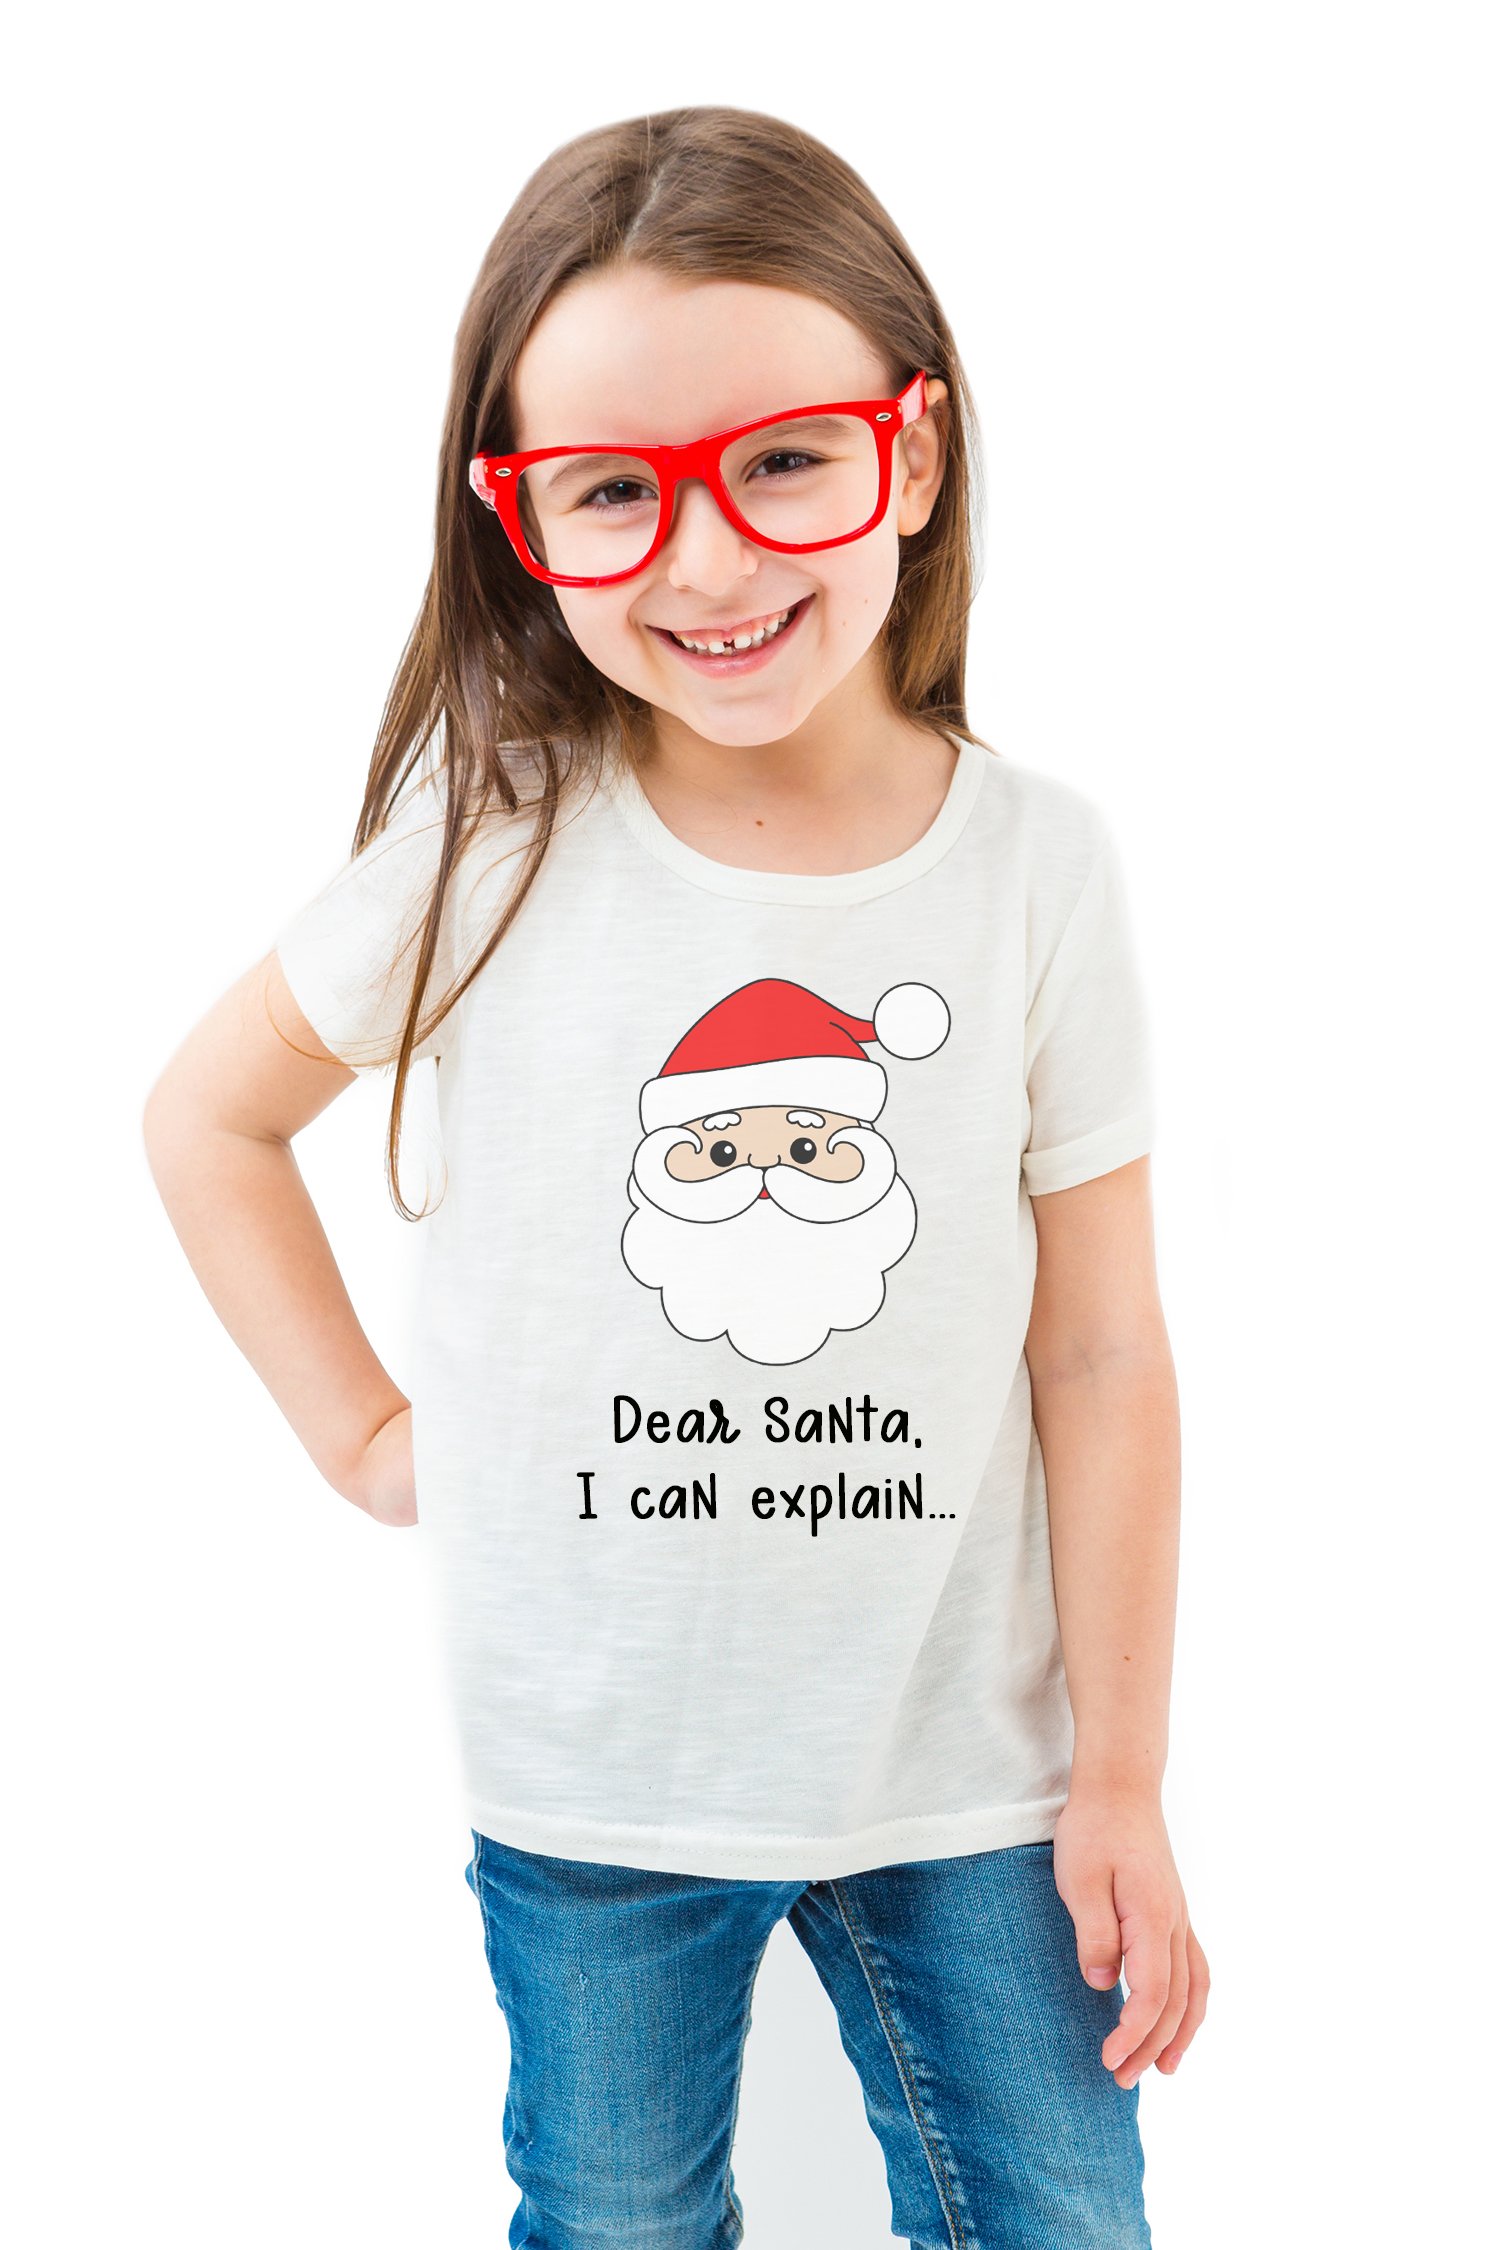 dear santa i can explain shirt worn by girl